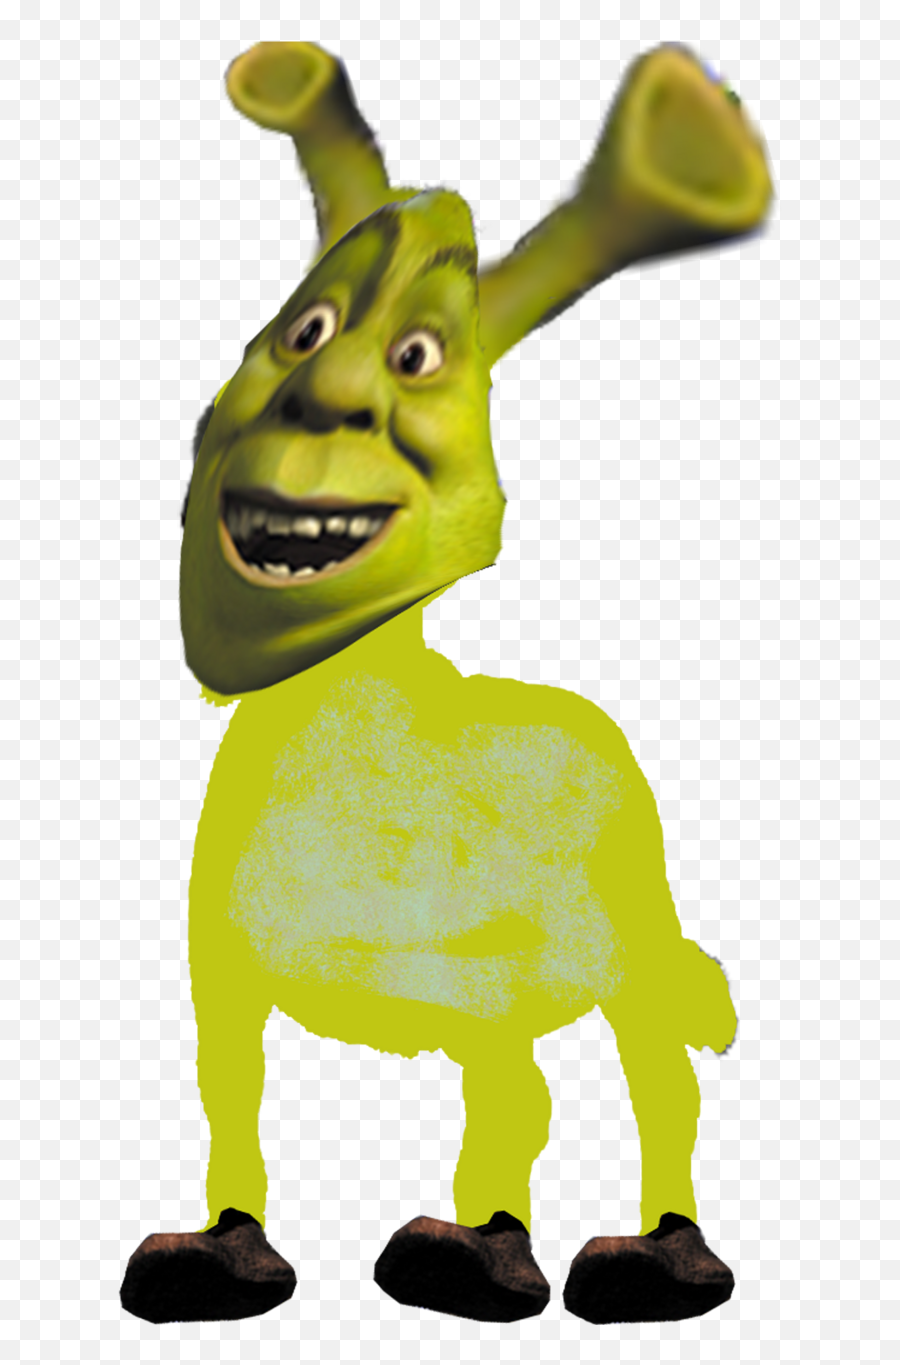 Imgur The Magic Of Internet - Shrek As A Donkey Png,Shrek Head Png